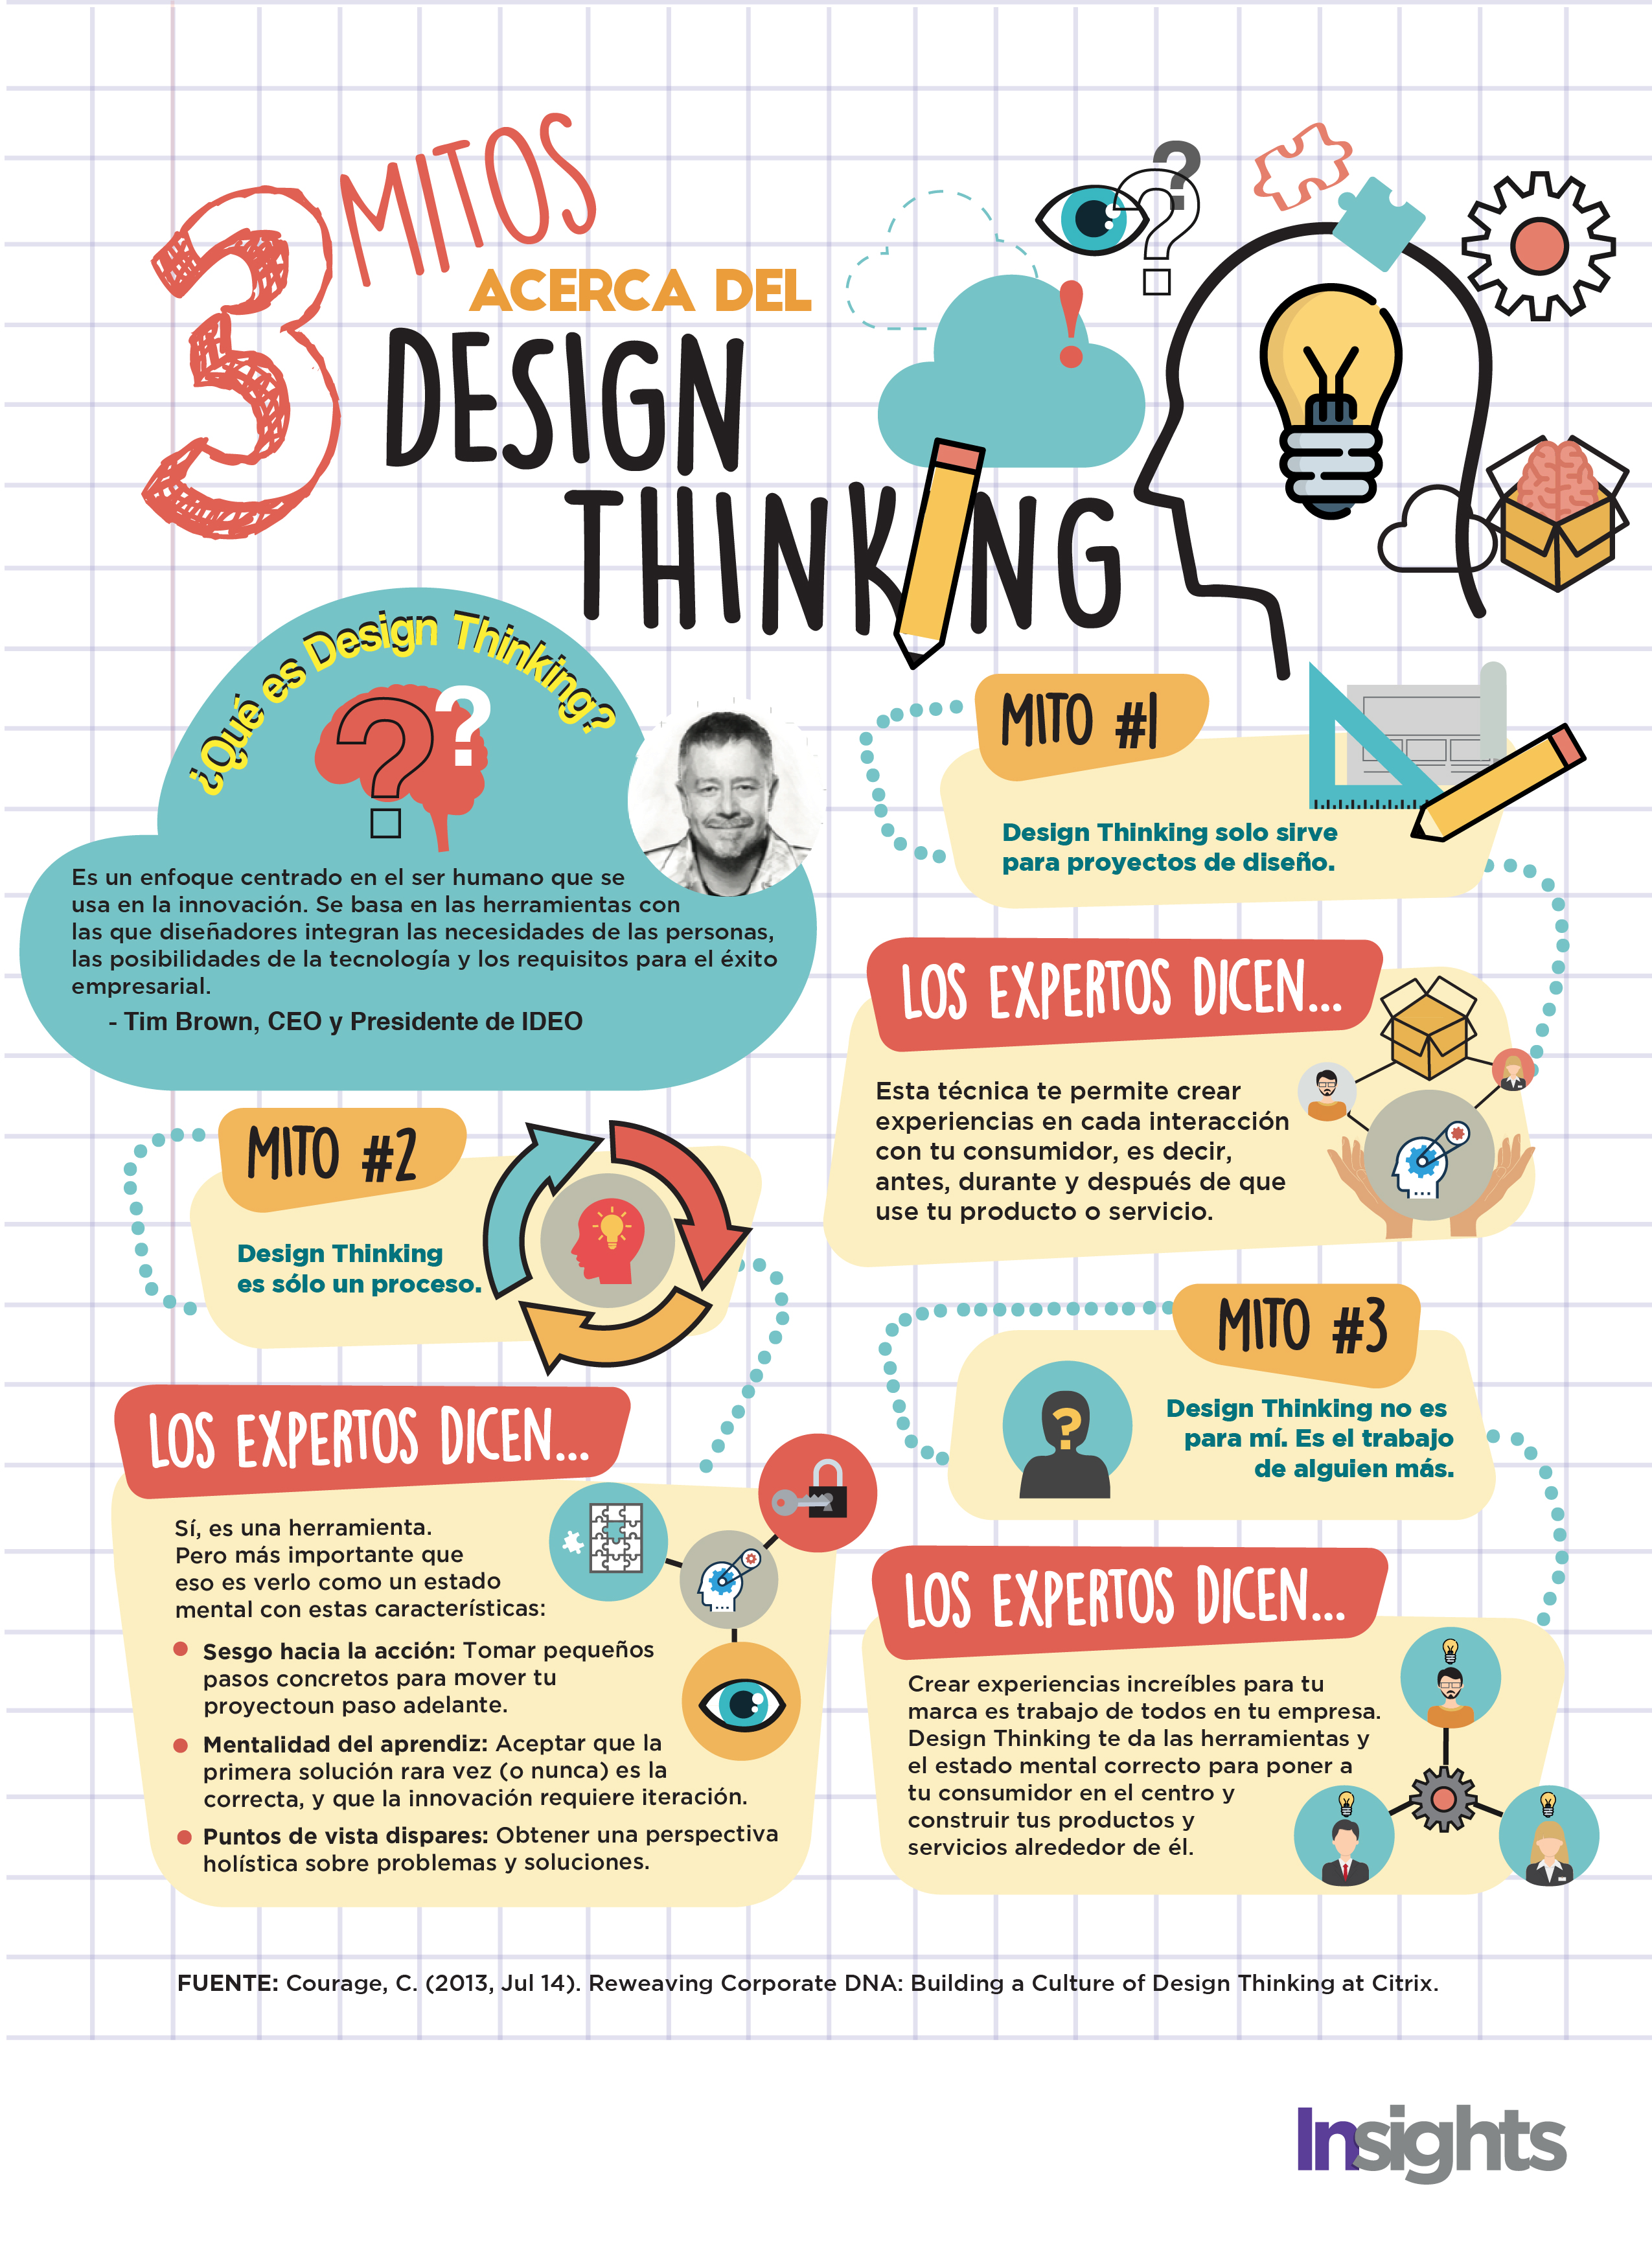 3 mitos del Design Thinking